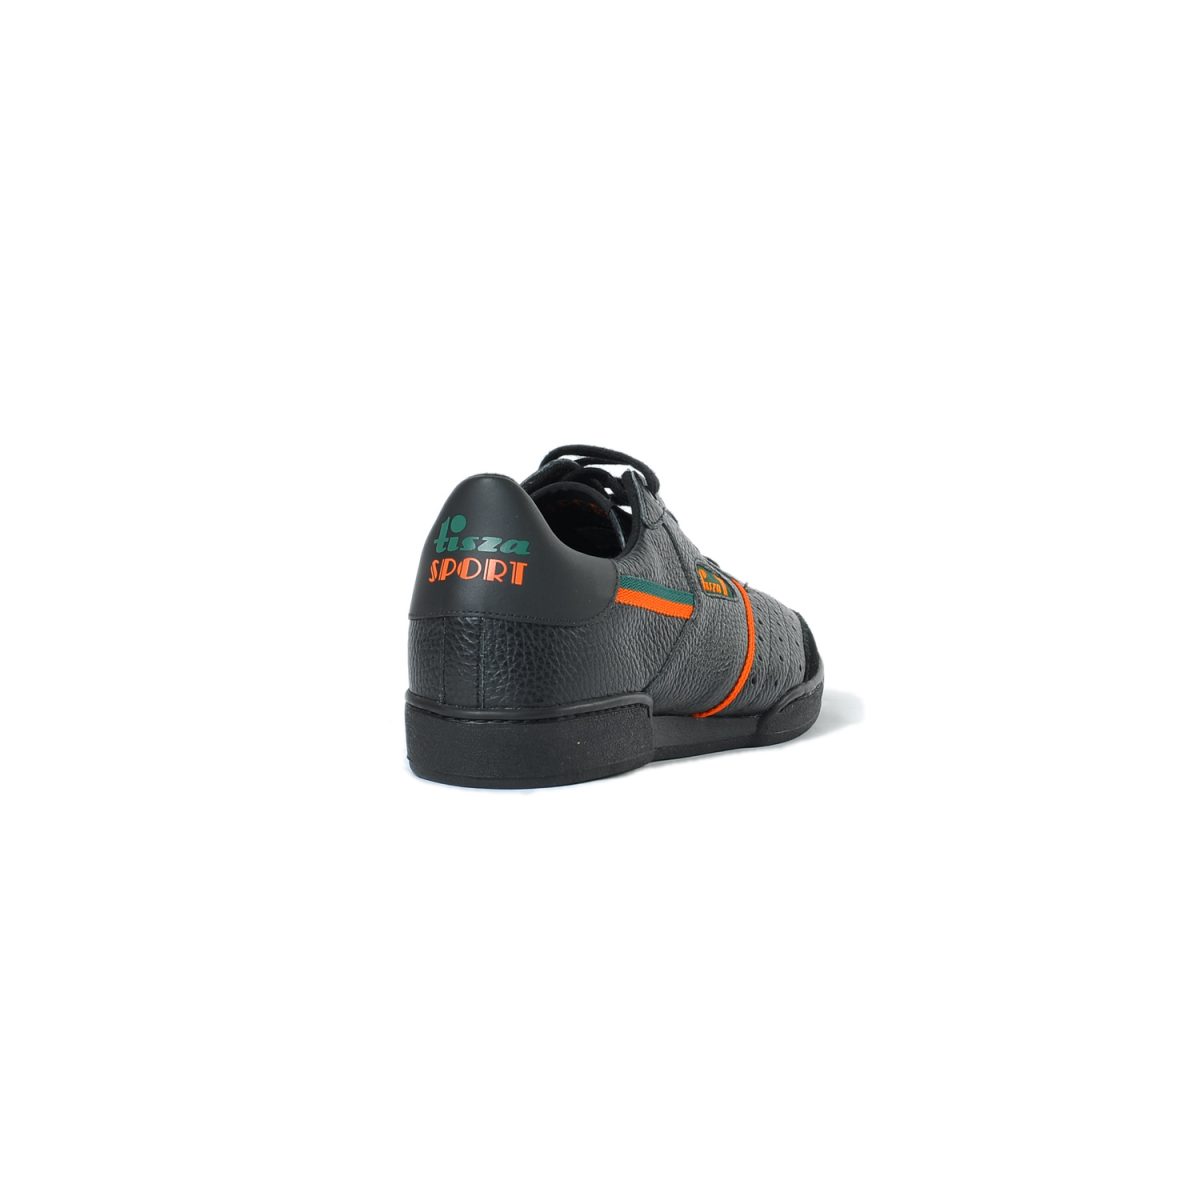 Tisza shoes - Sport - Black-green-orange